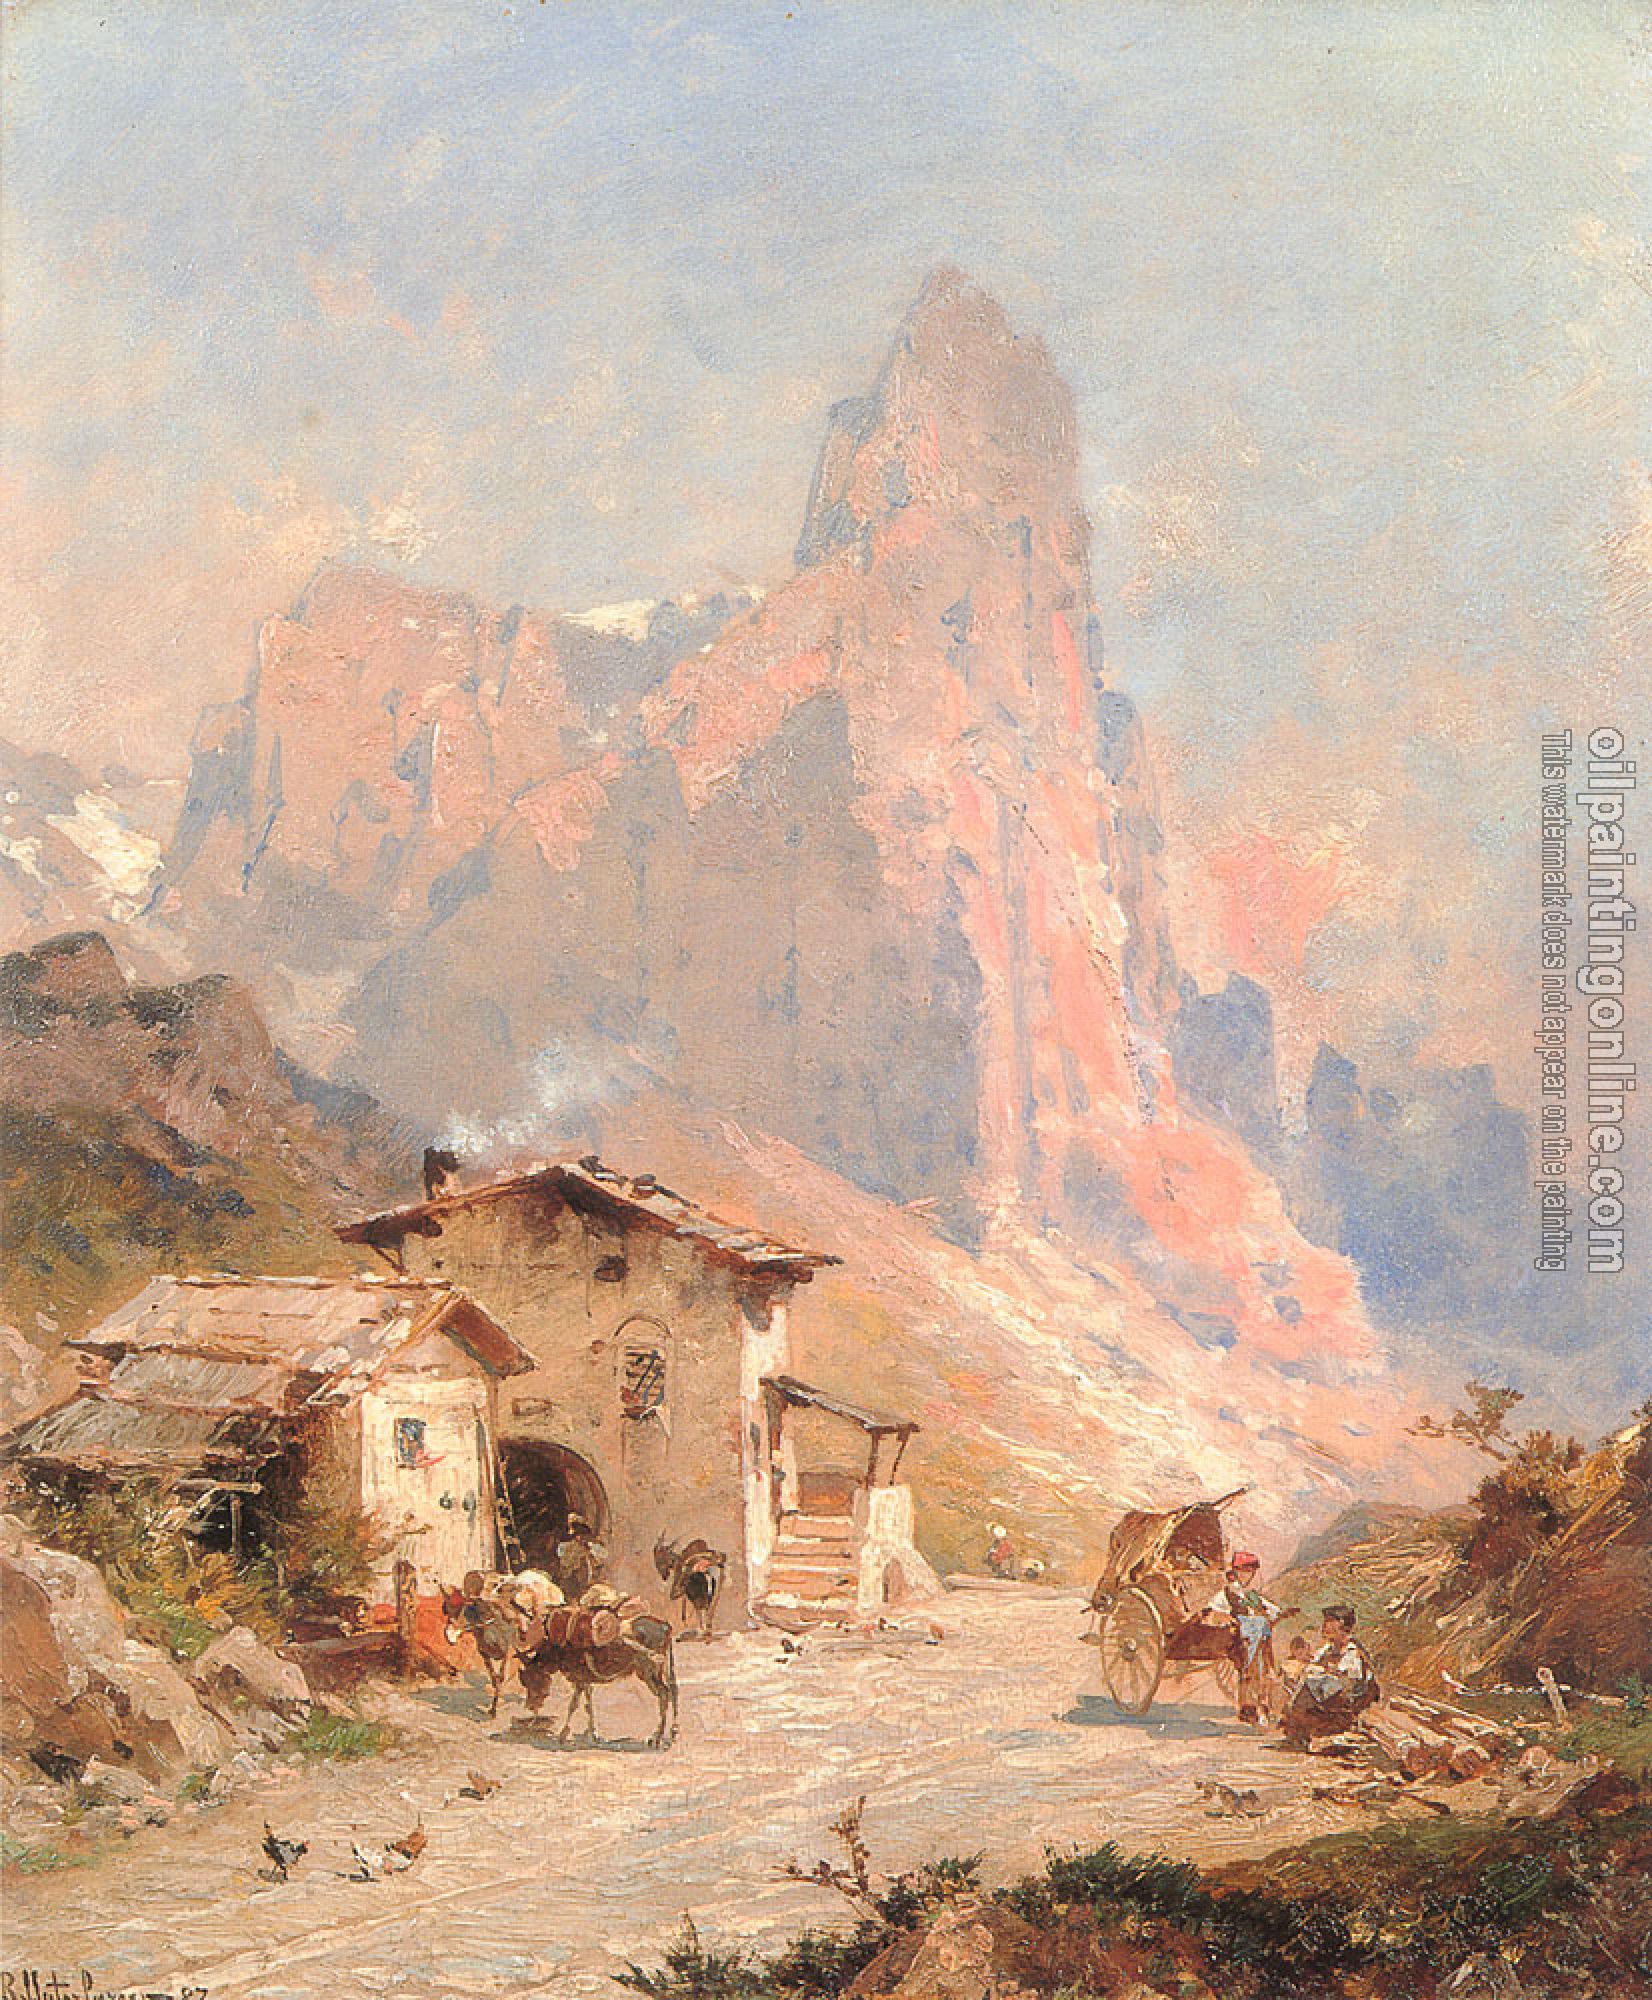 Unterberger, Franz Richard - Figures in a Village in the Dolomites